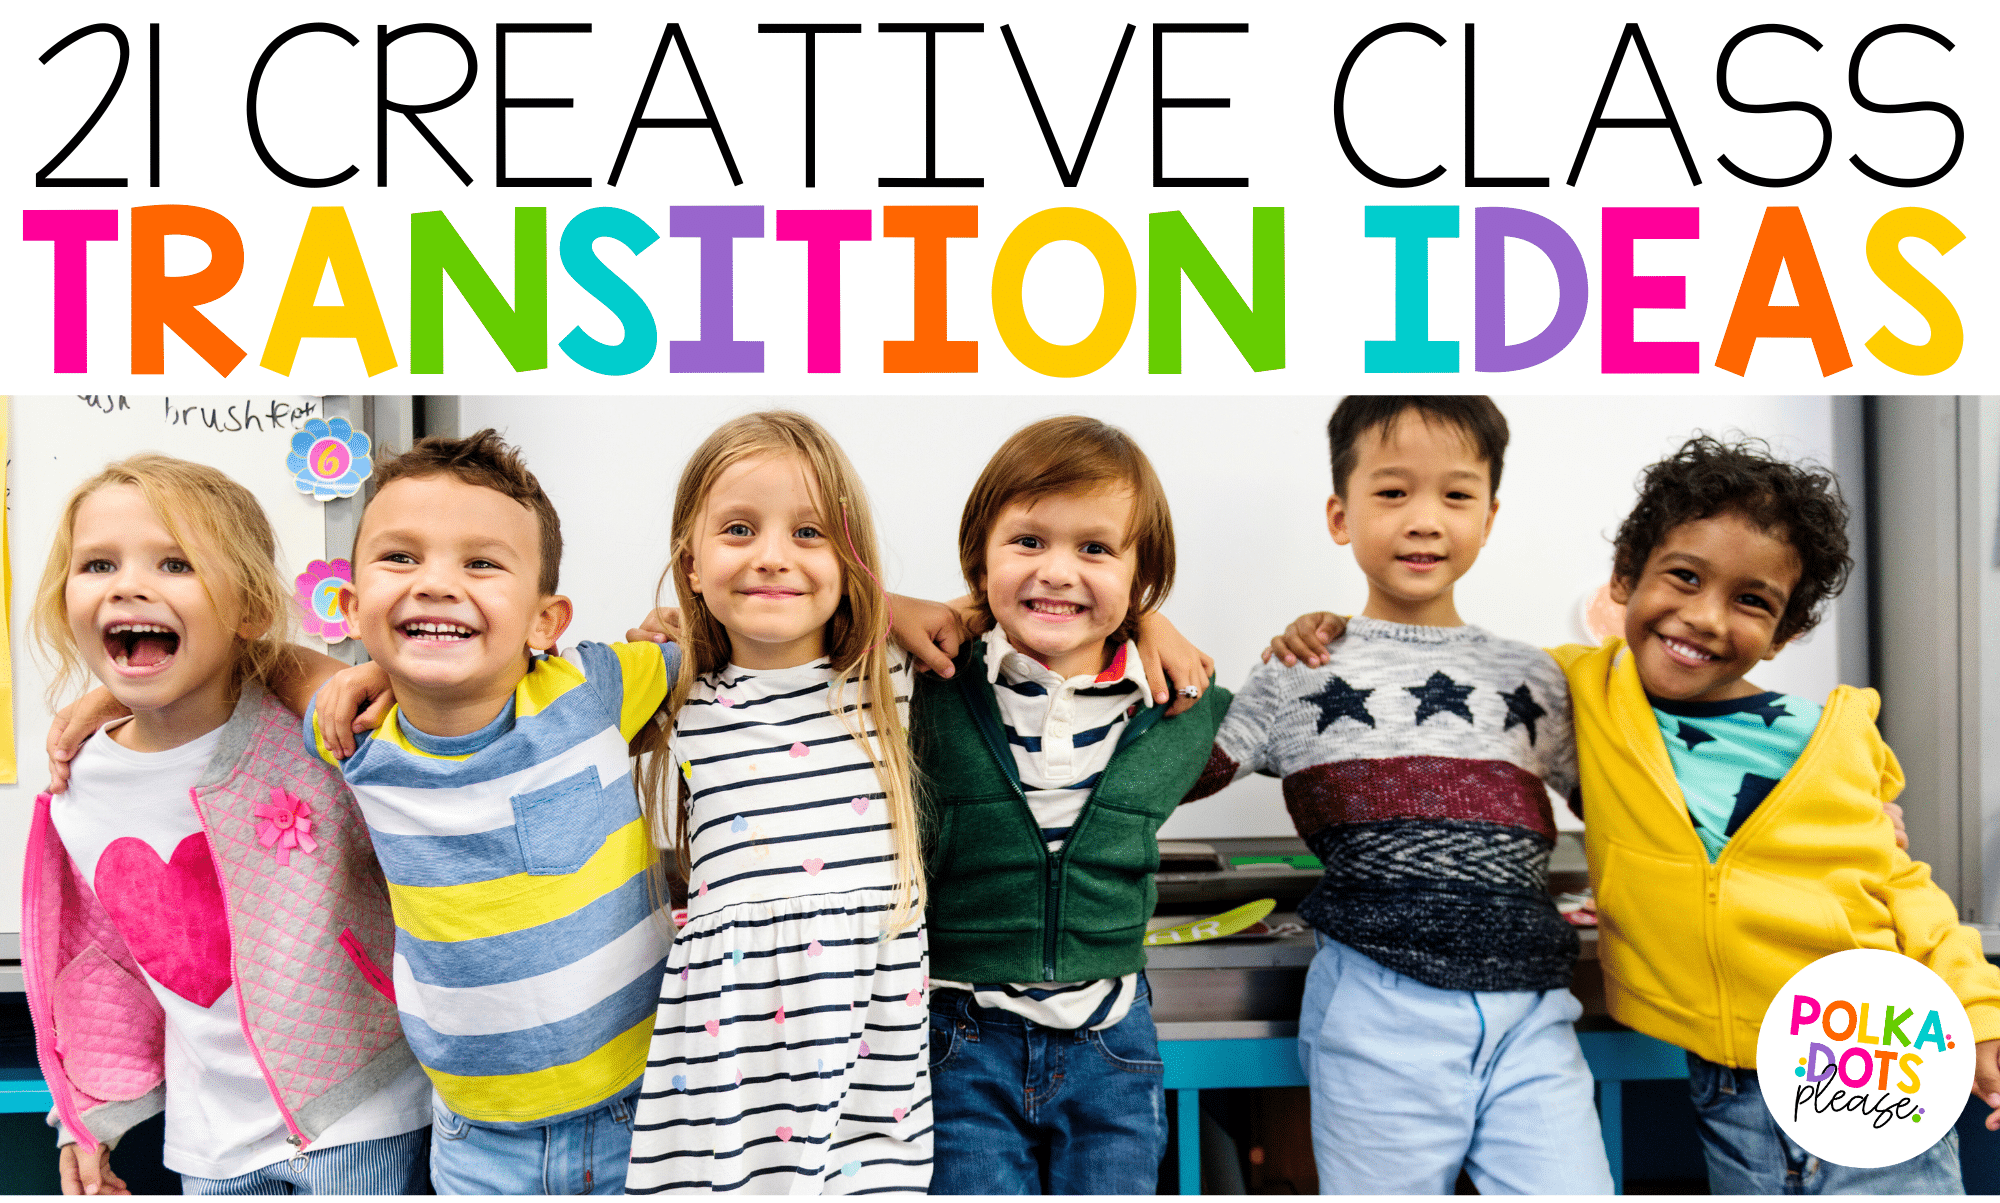 Creative Class Transition Ideas